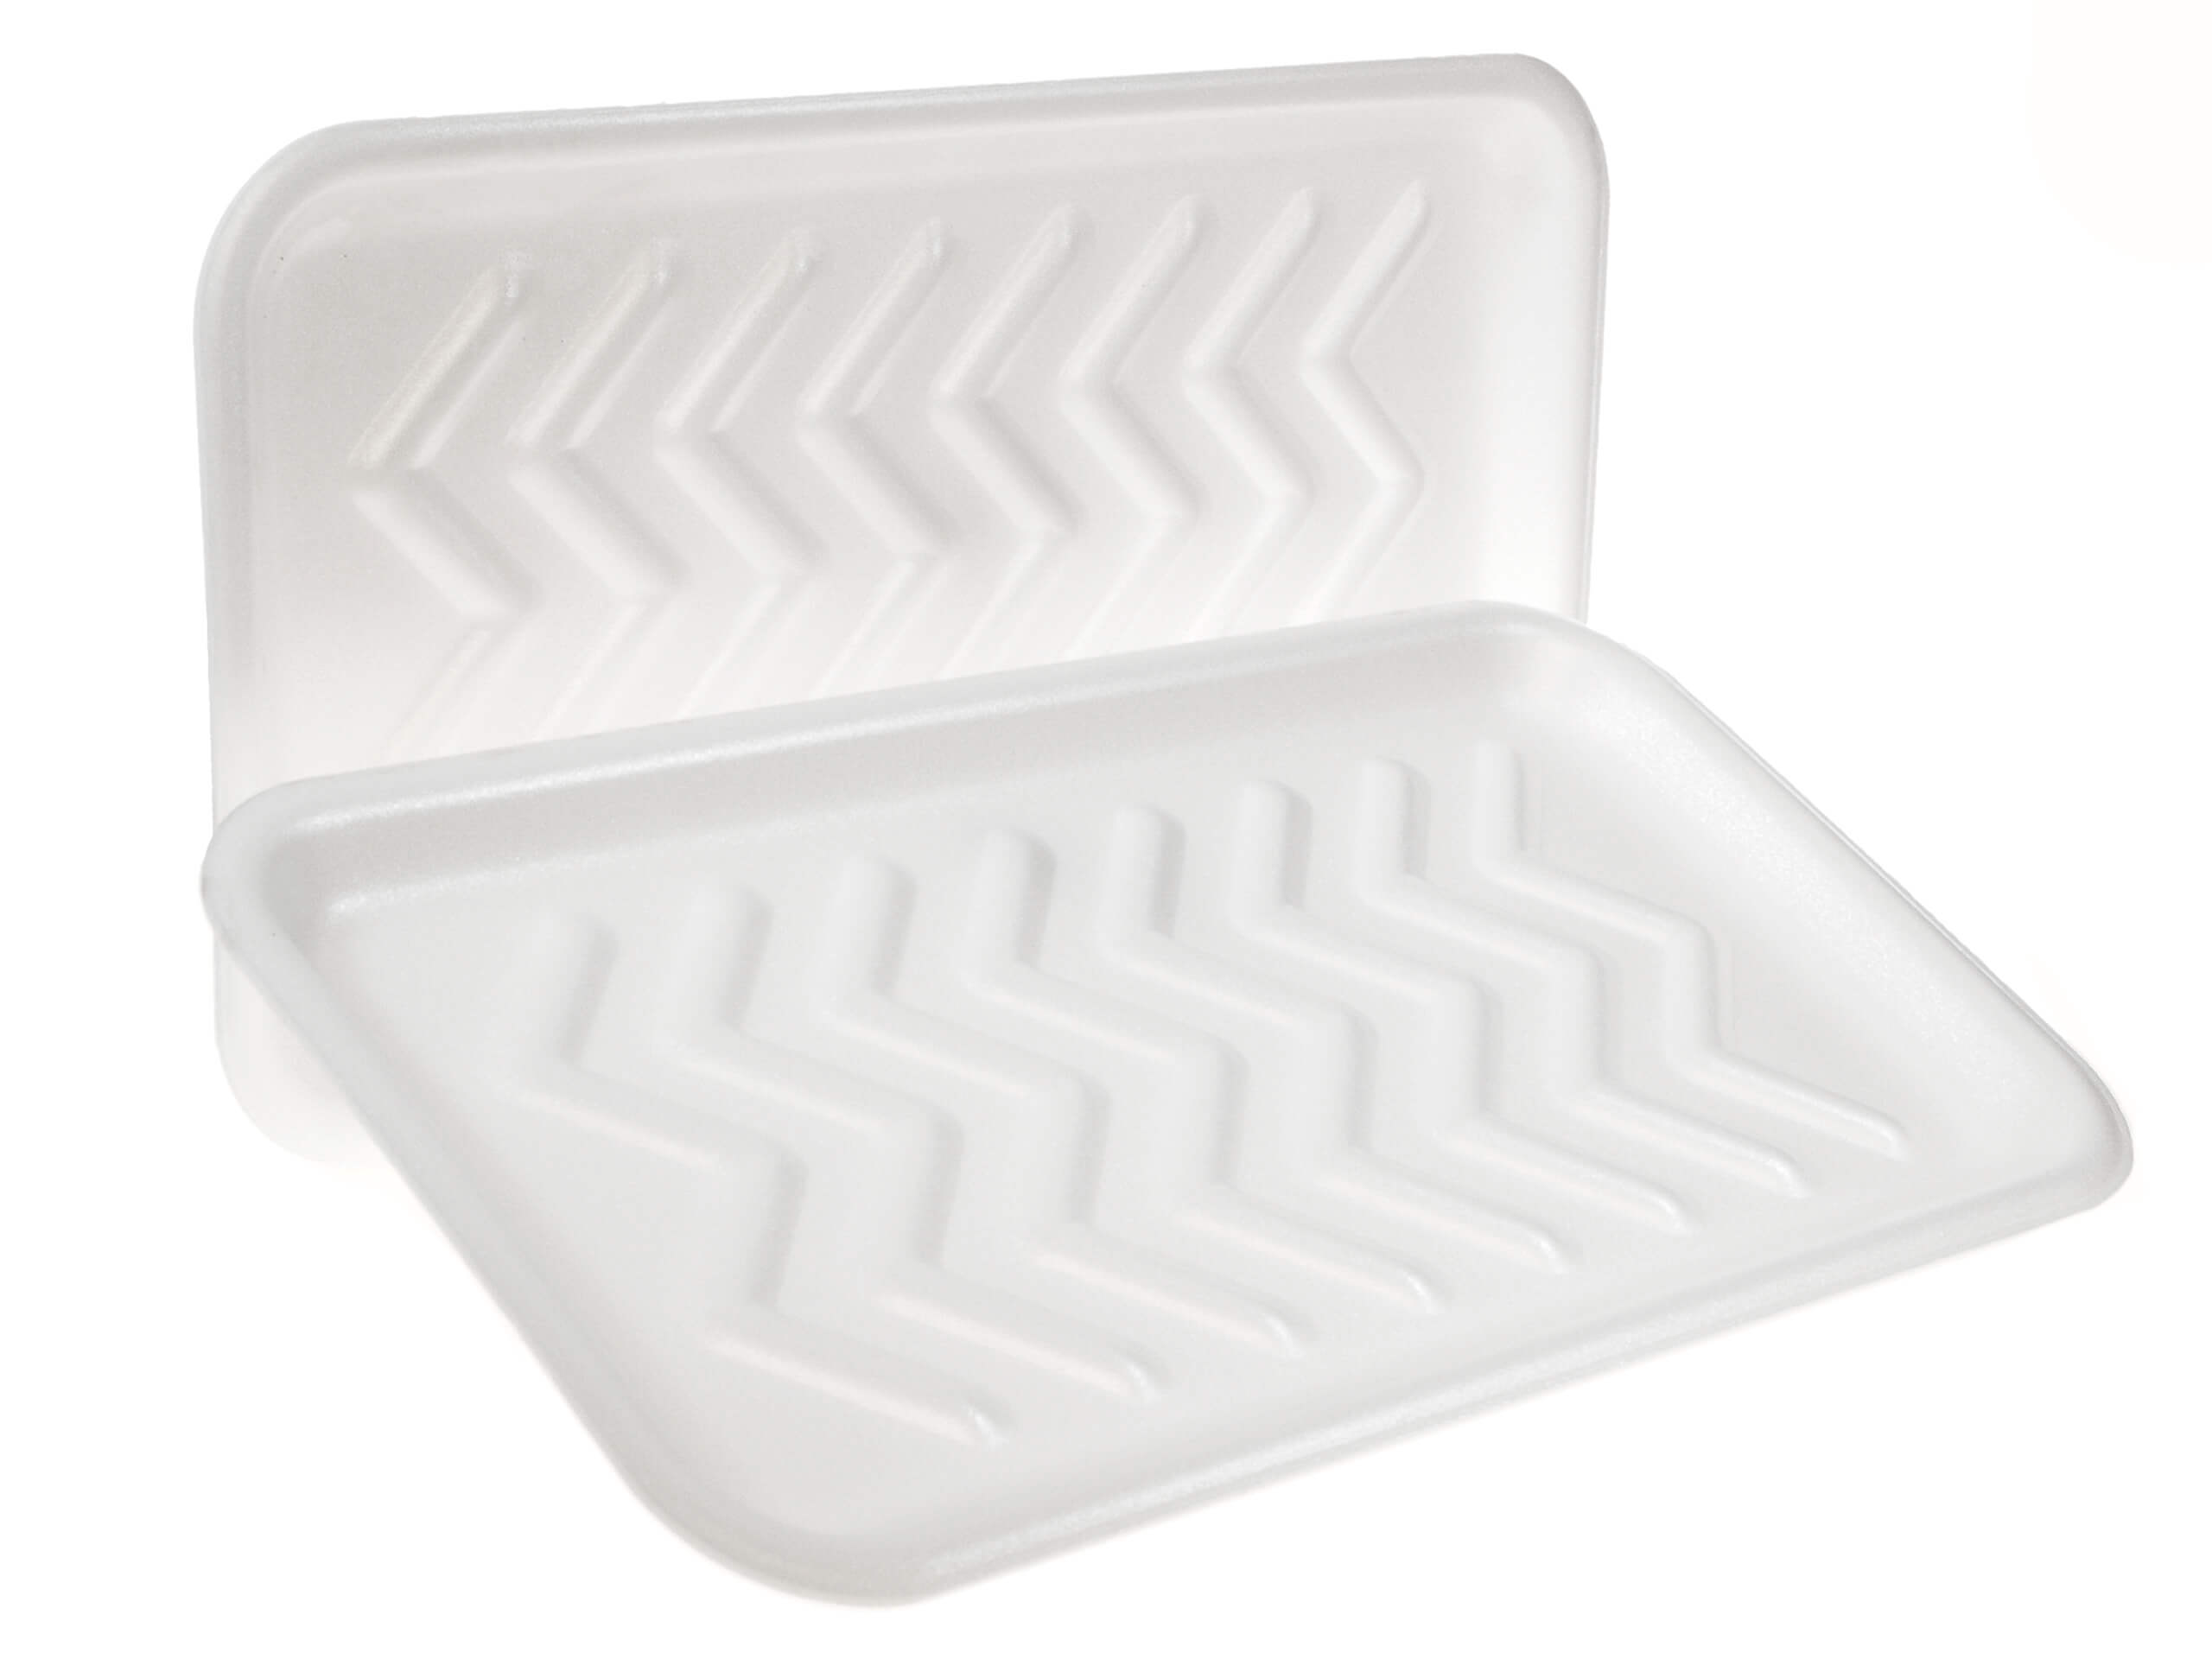  White Foam Meat Trays 5.75 x 8.25 Bulk White Tray